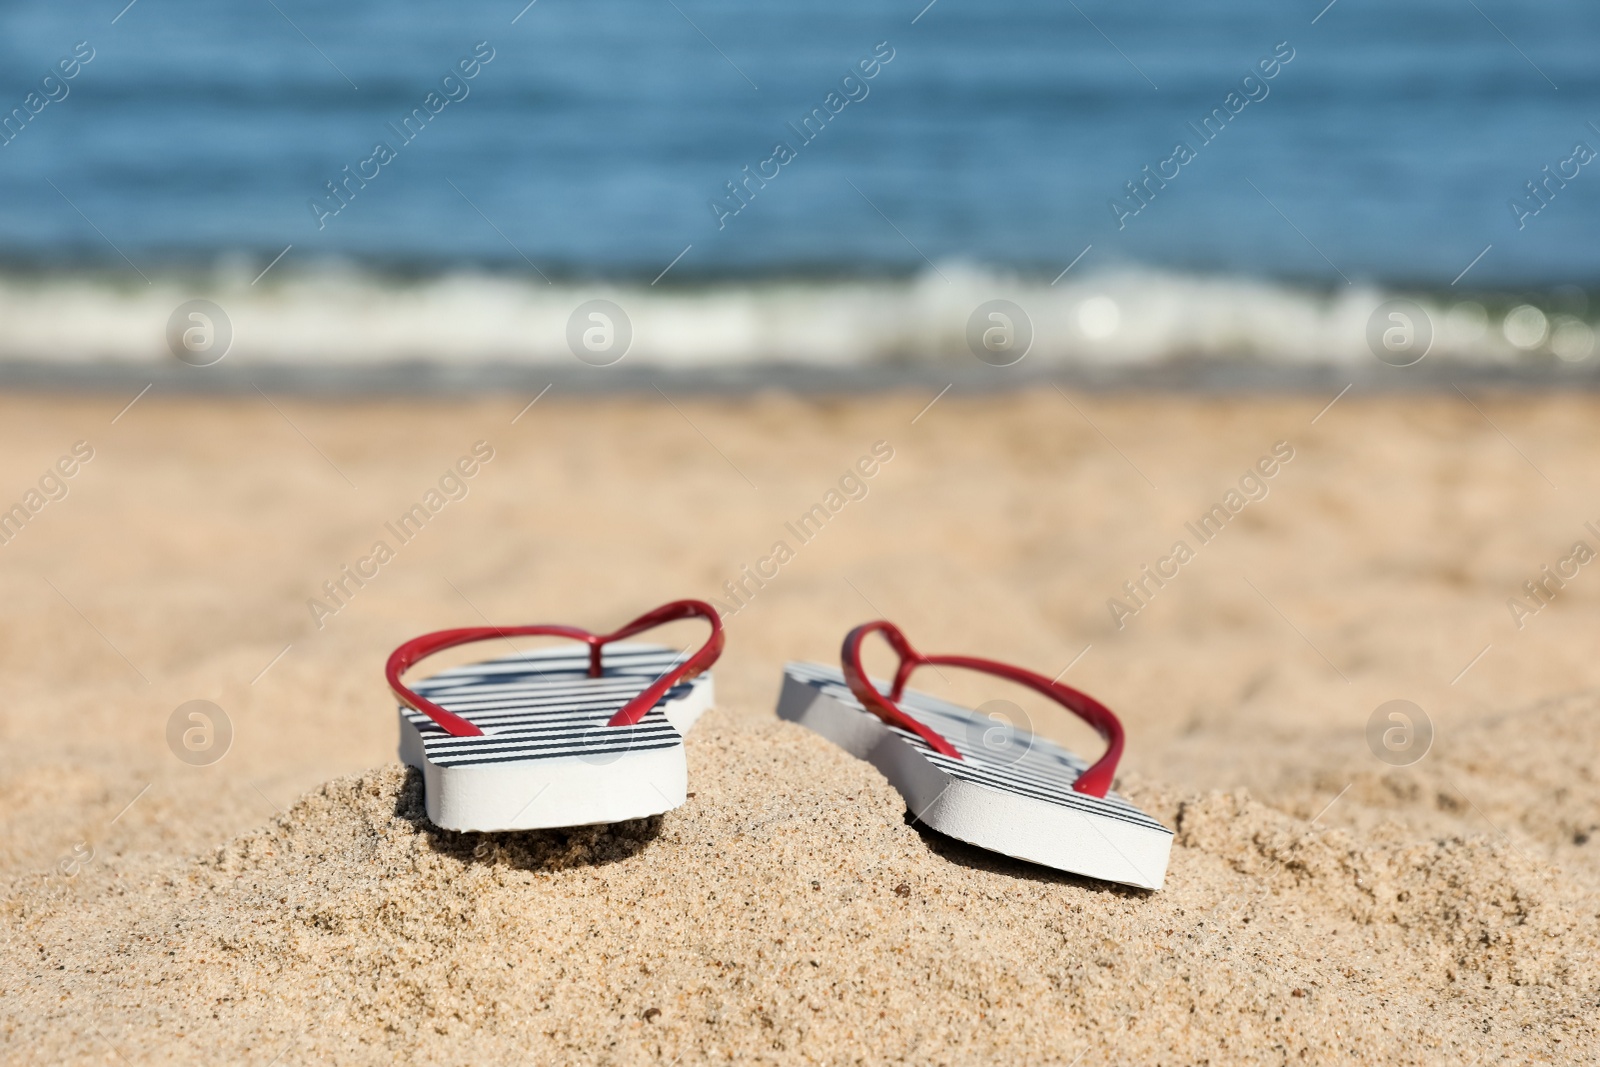 Photo of Striped flip flops on sandy beach near sea